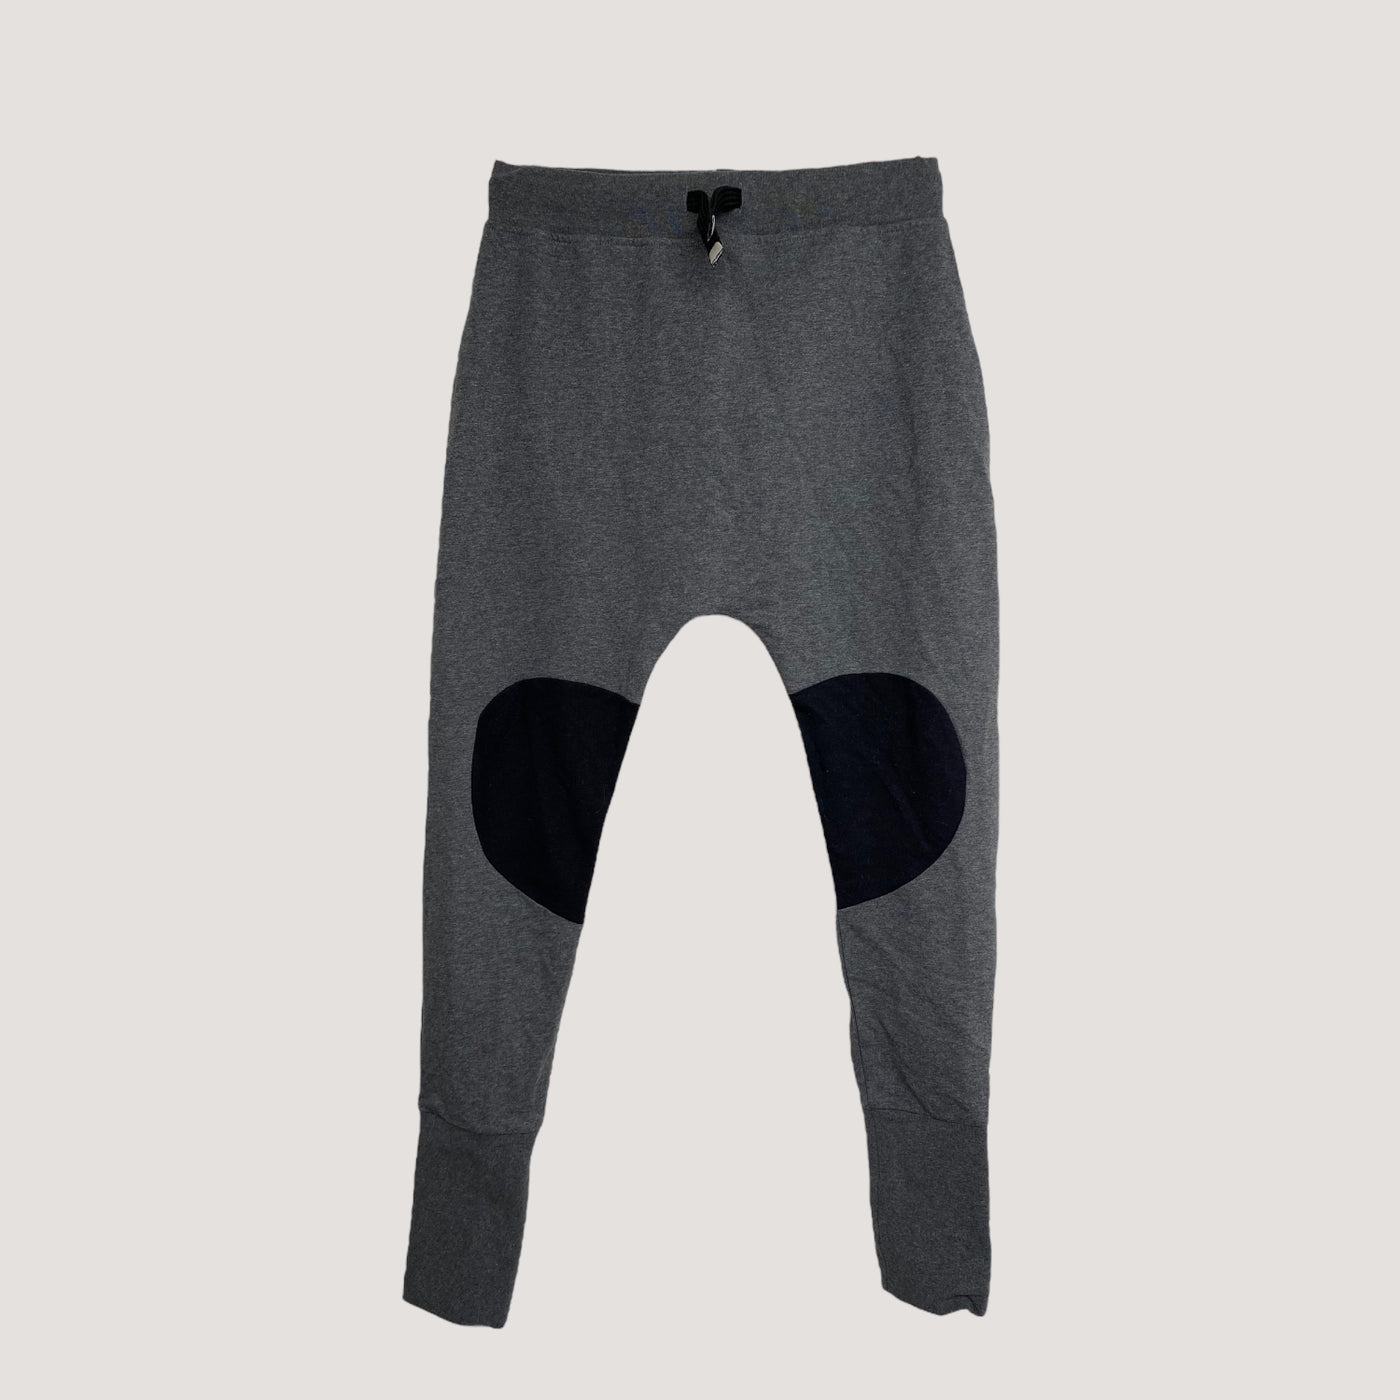 Papu patch baggy pants, dark grey/black | 134/140cm